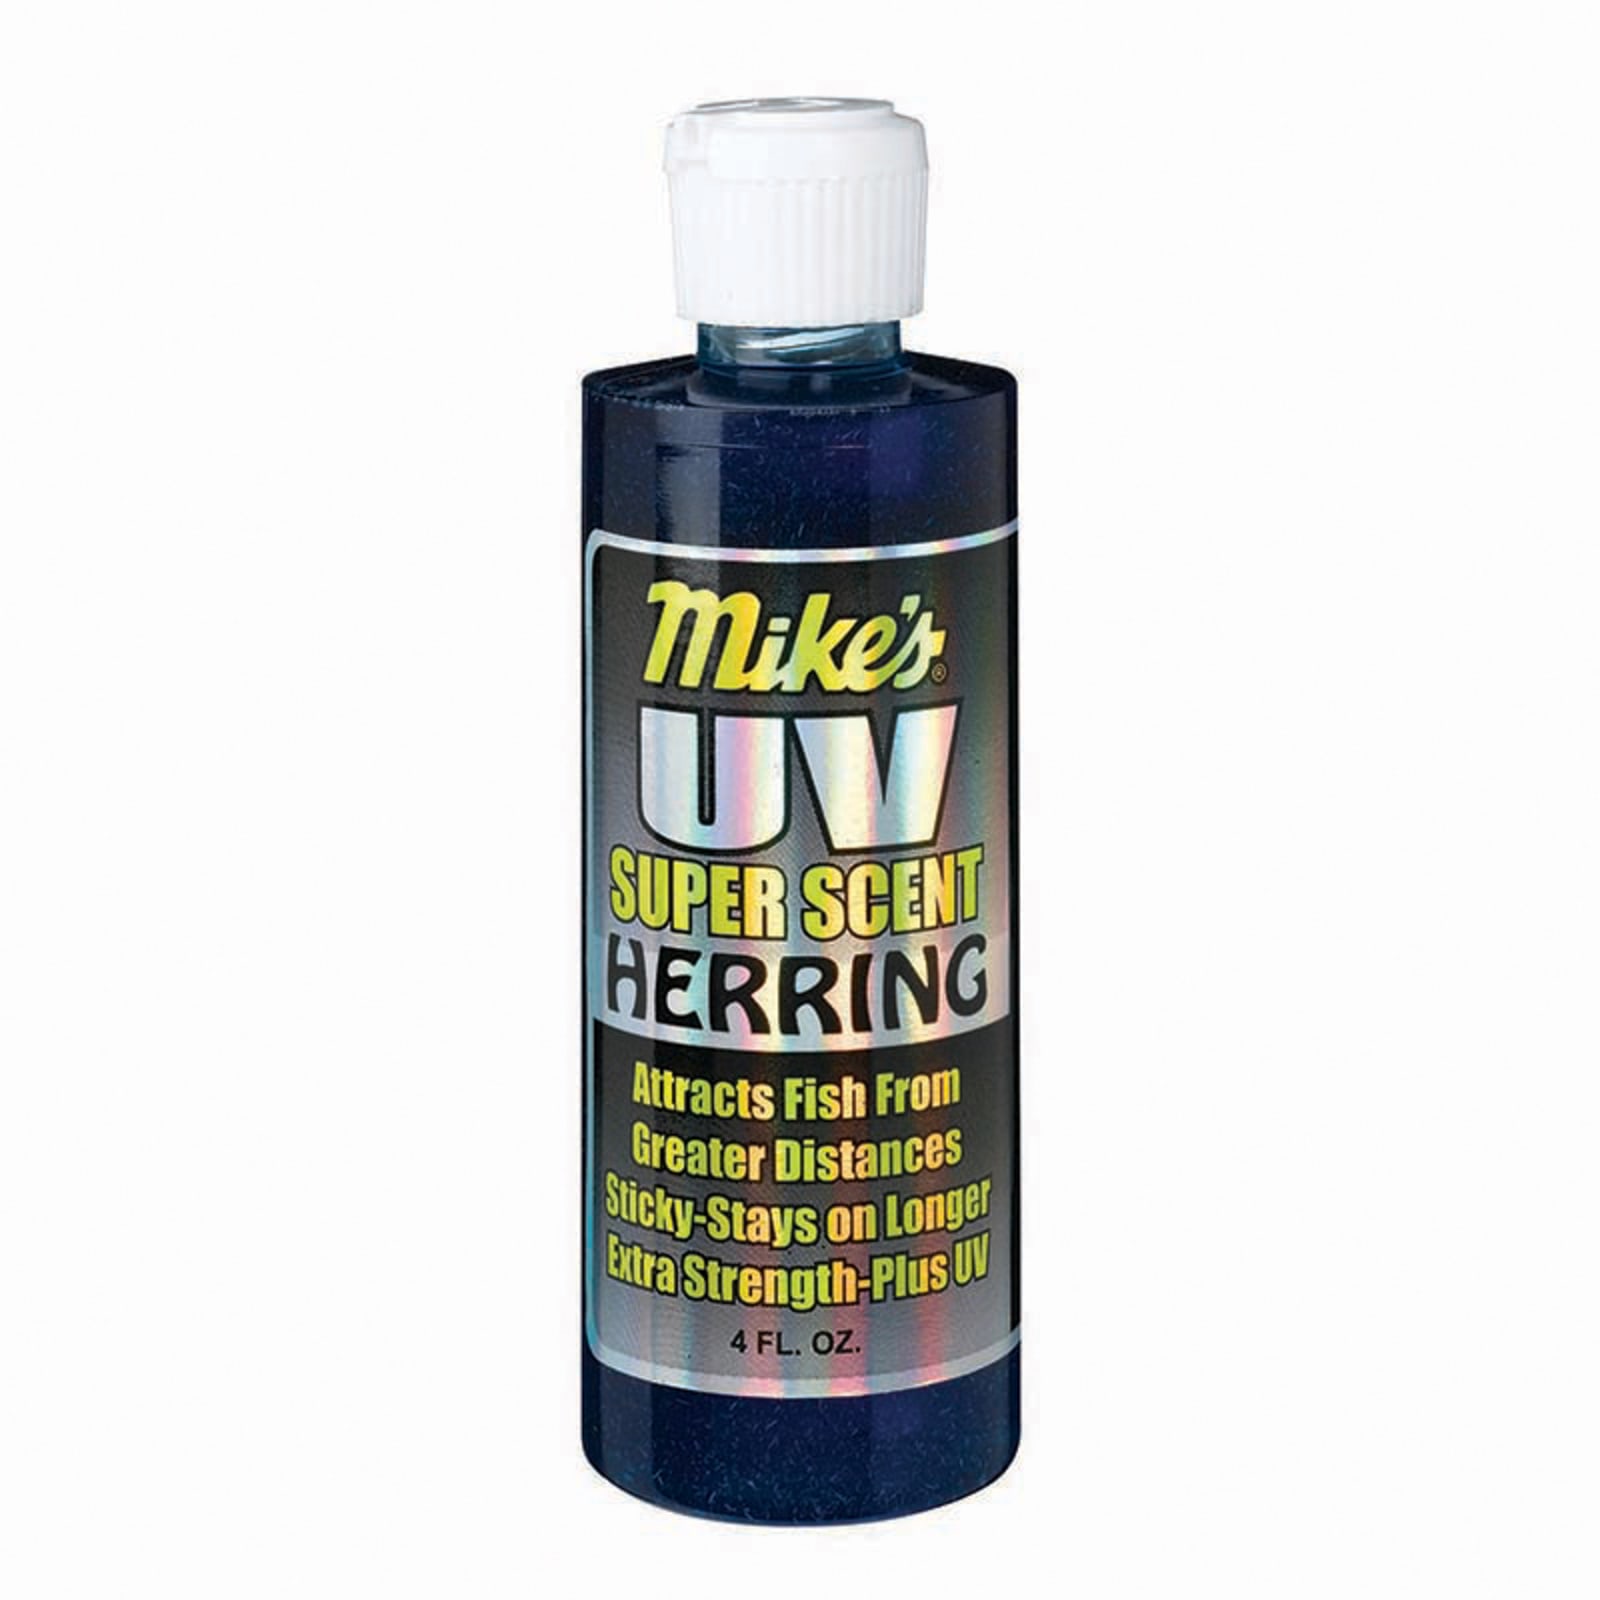 Lunker Lotion - UV Herring by Atlas-Mike's at Fleet Farm